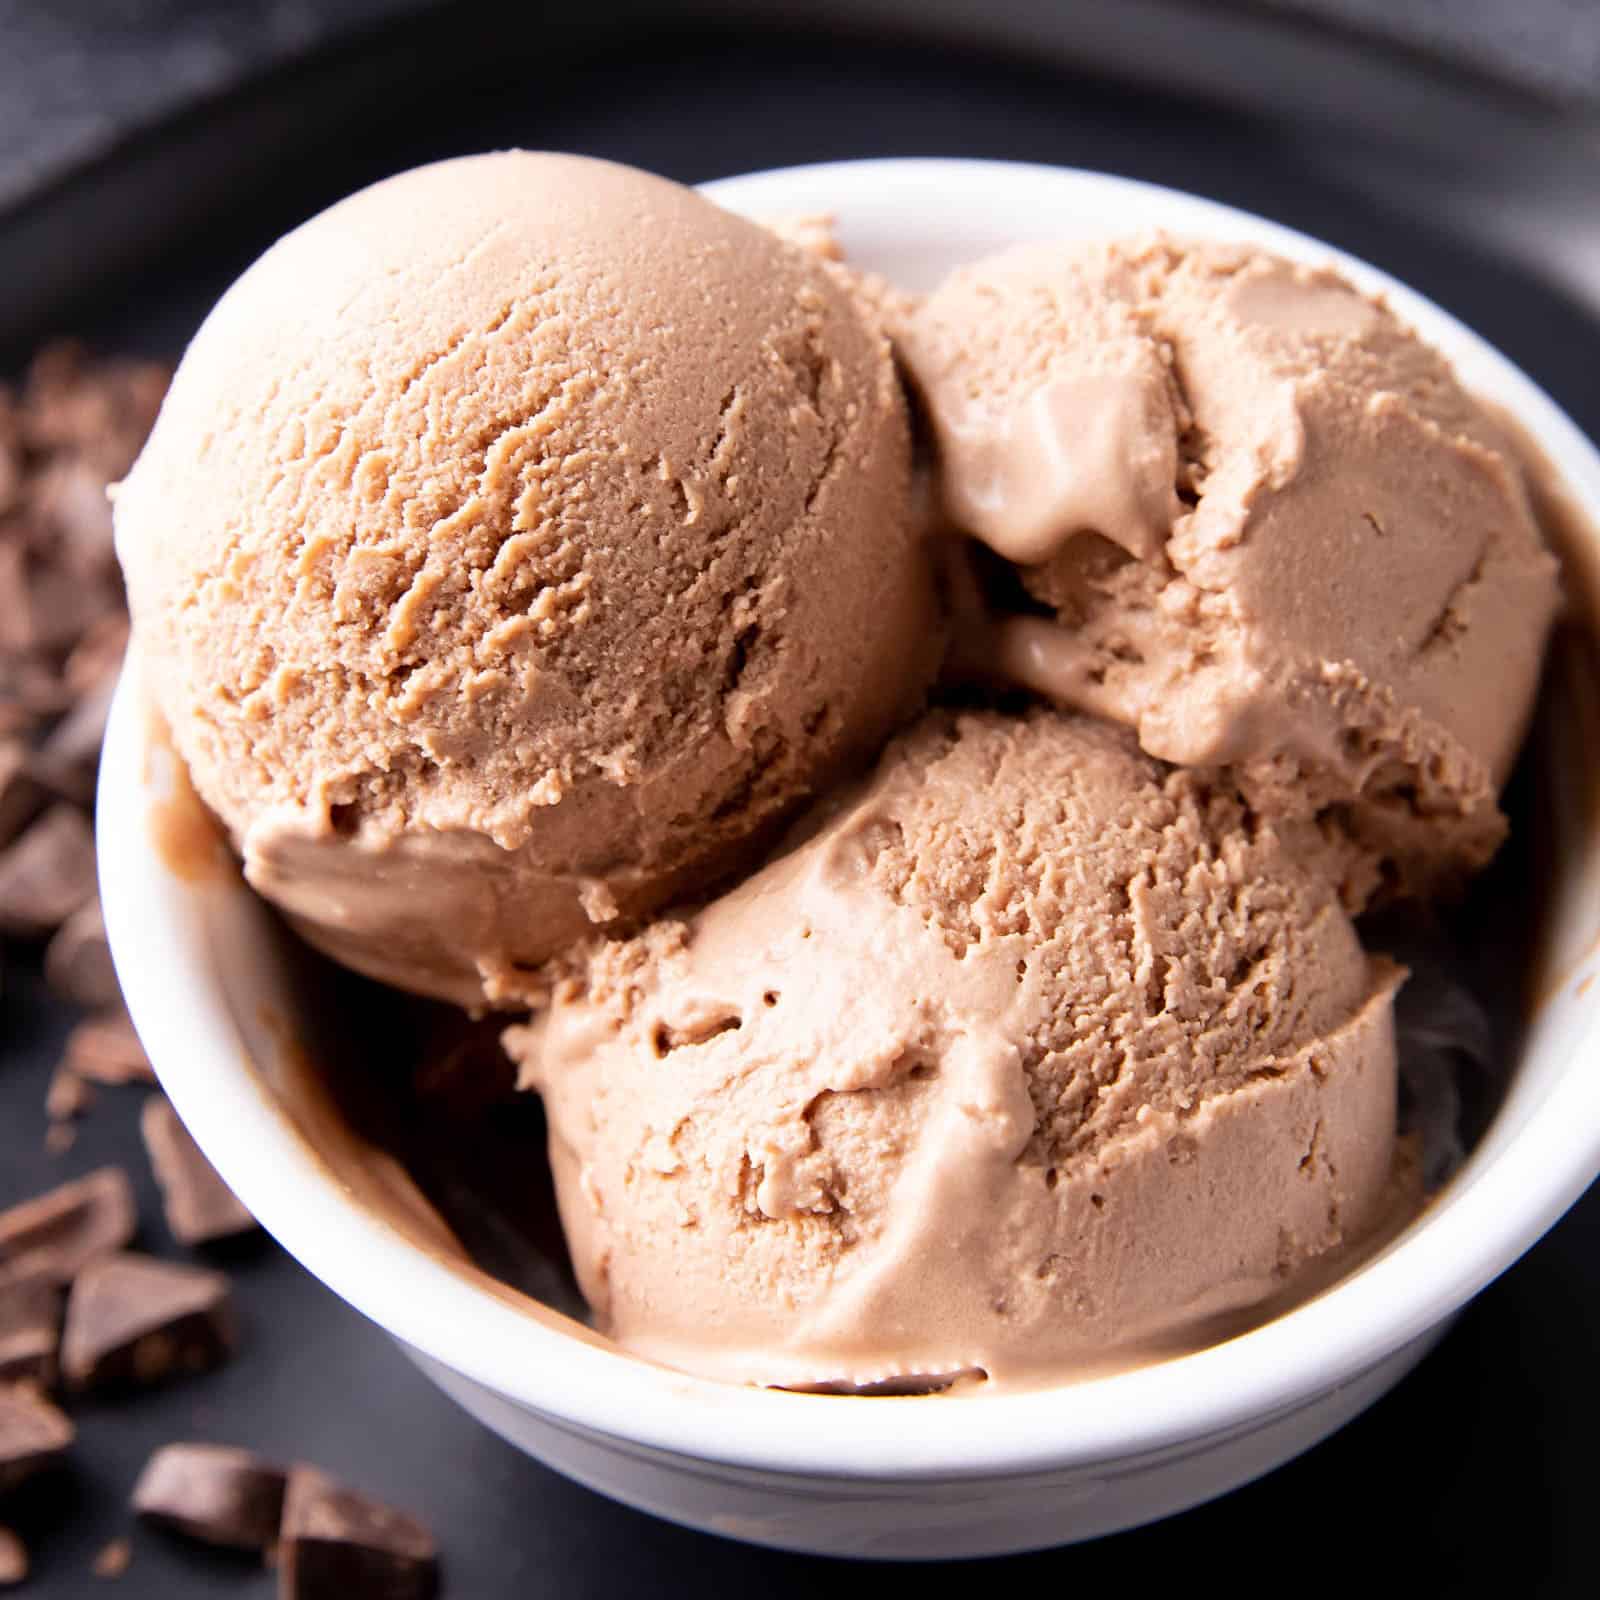 Chocolate Keto Ice Cream Recipe – Homemade!